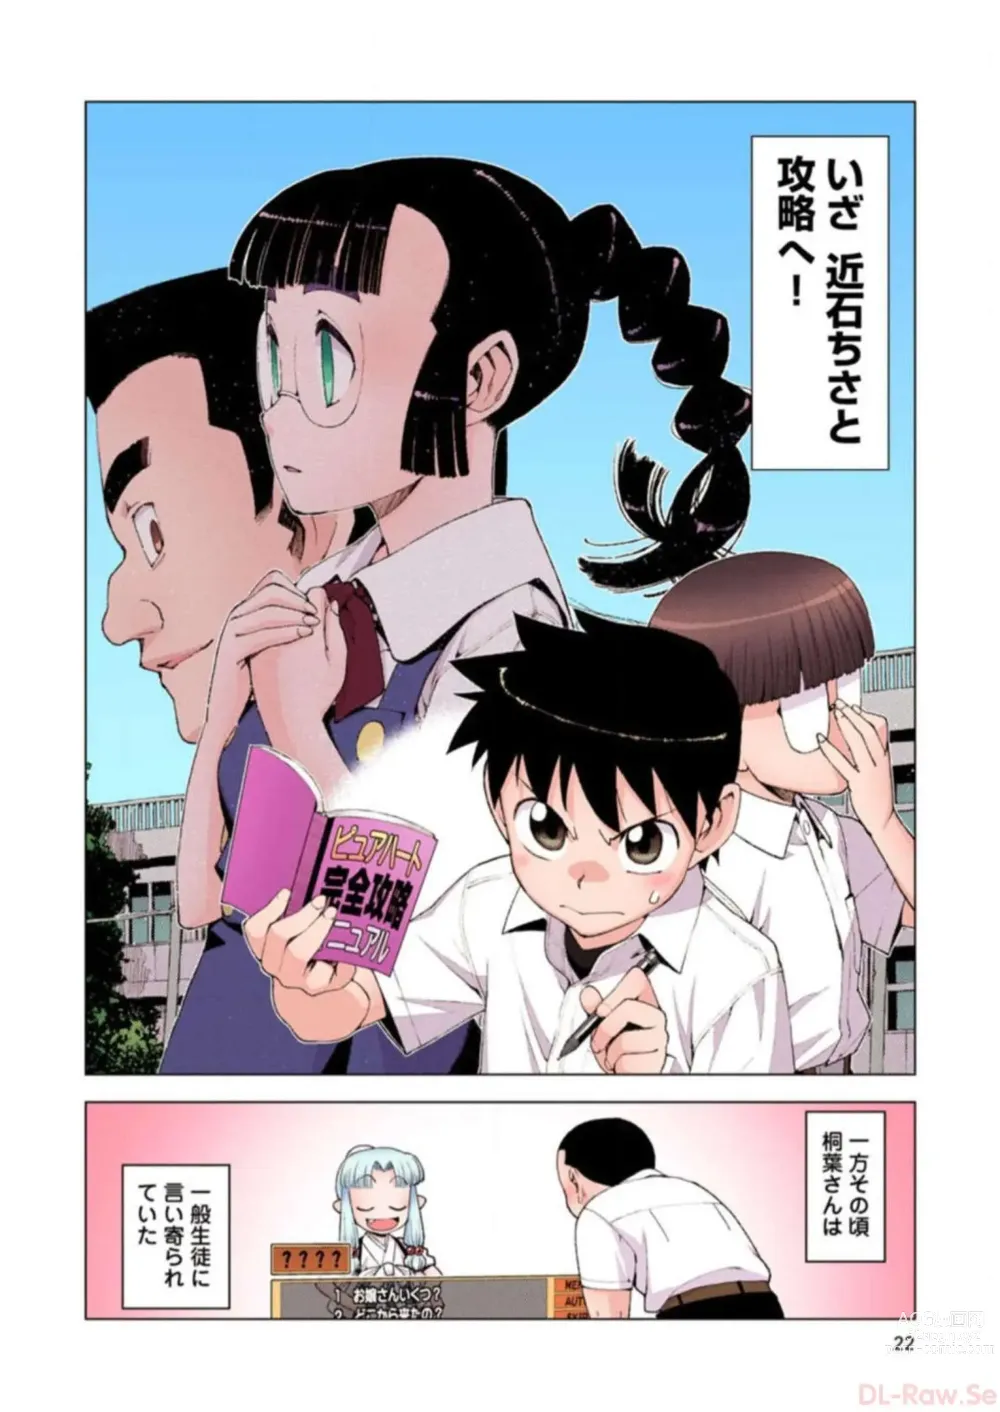 Page 22 of manga Tsugumomo Digital Colored Comics V3